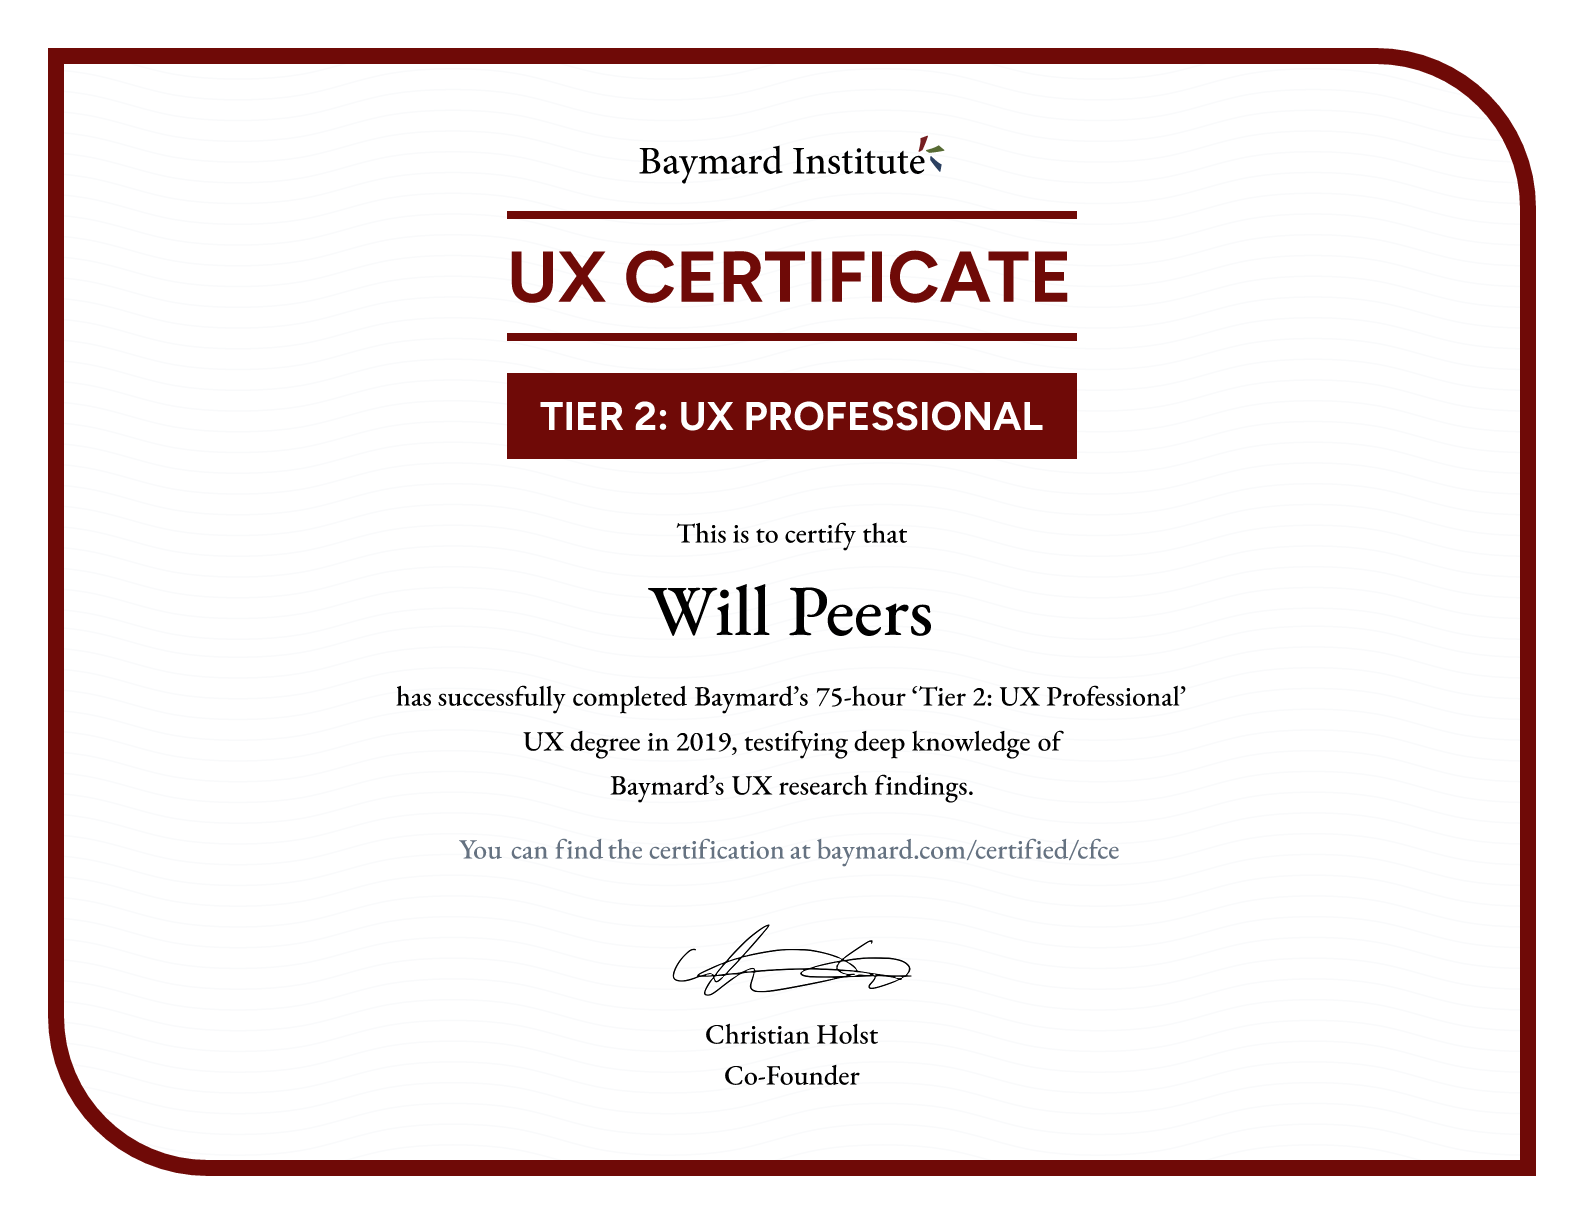 Will Peers’s certificate